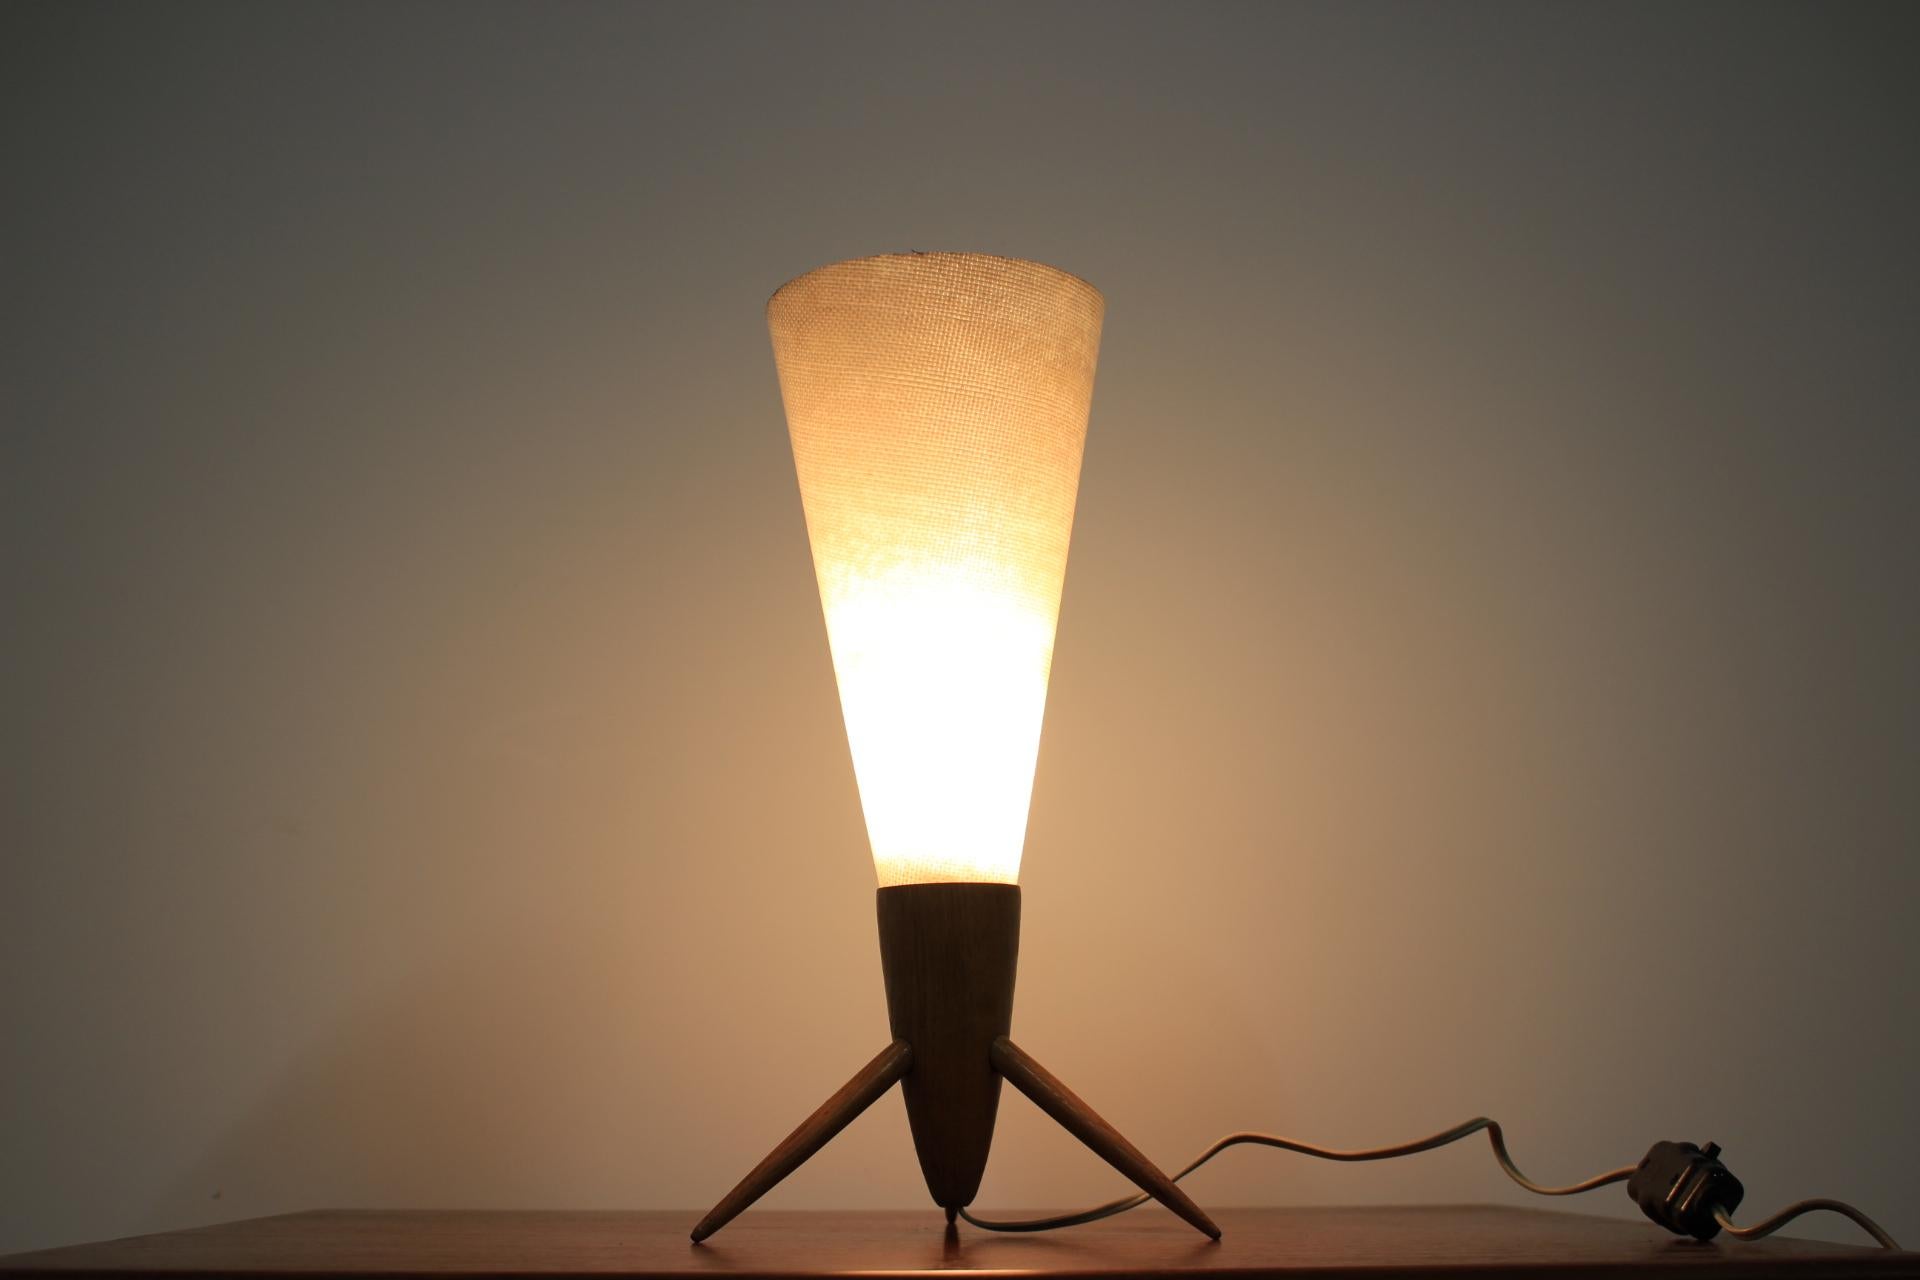 - very rare type of lamp
- nice style of lighting.
 